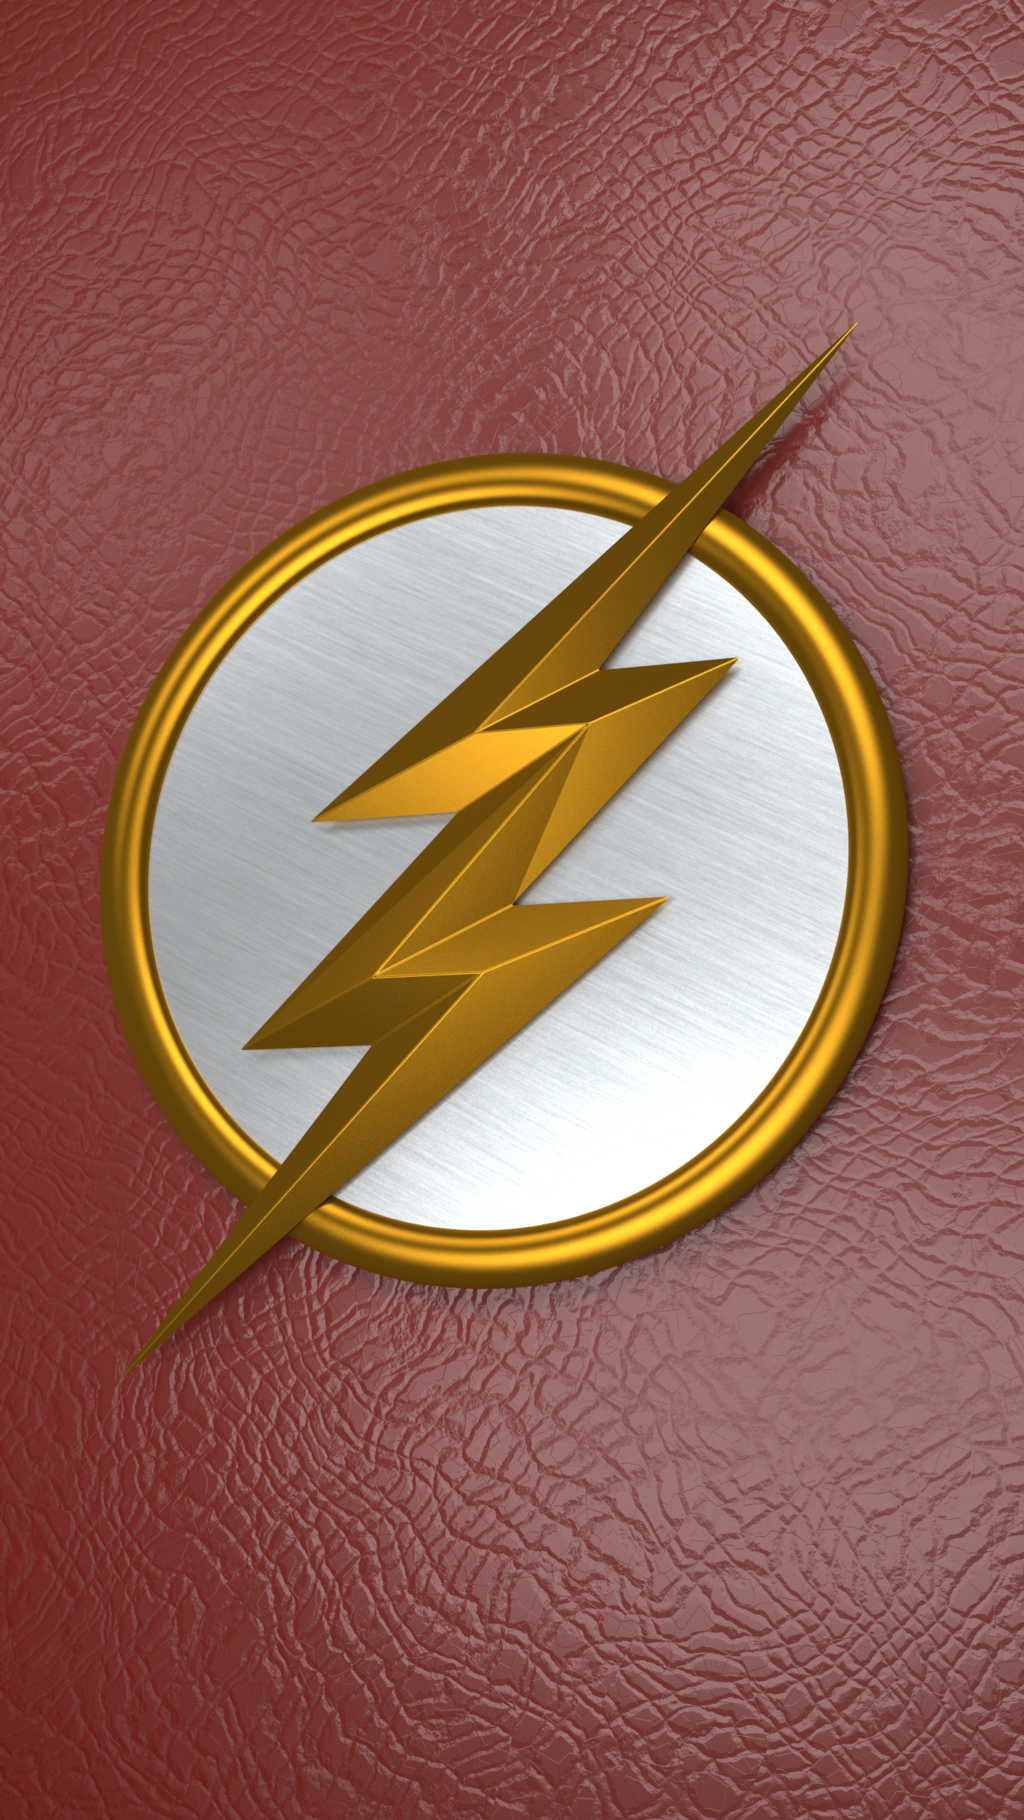 The Flash Logo Wallpaper. Flash comics, Flash wallpaper, The flash